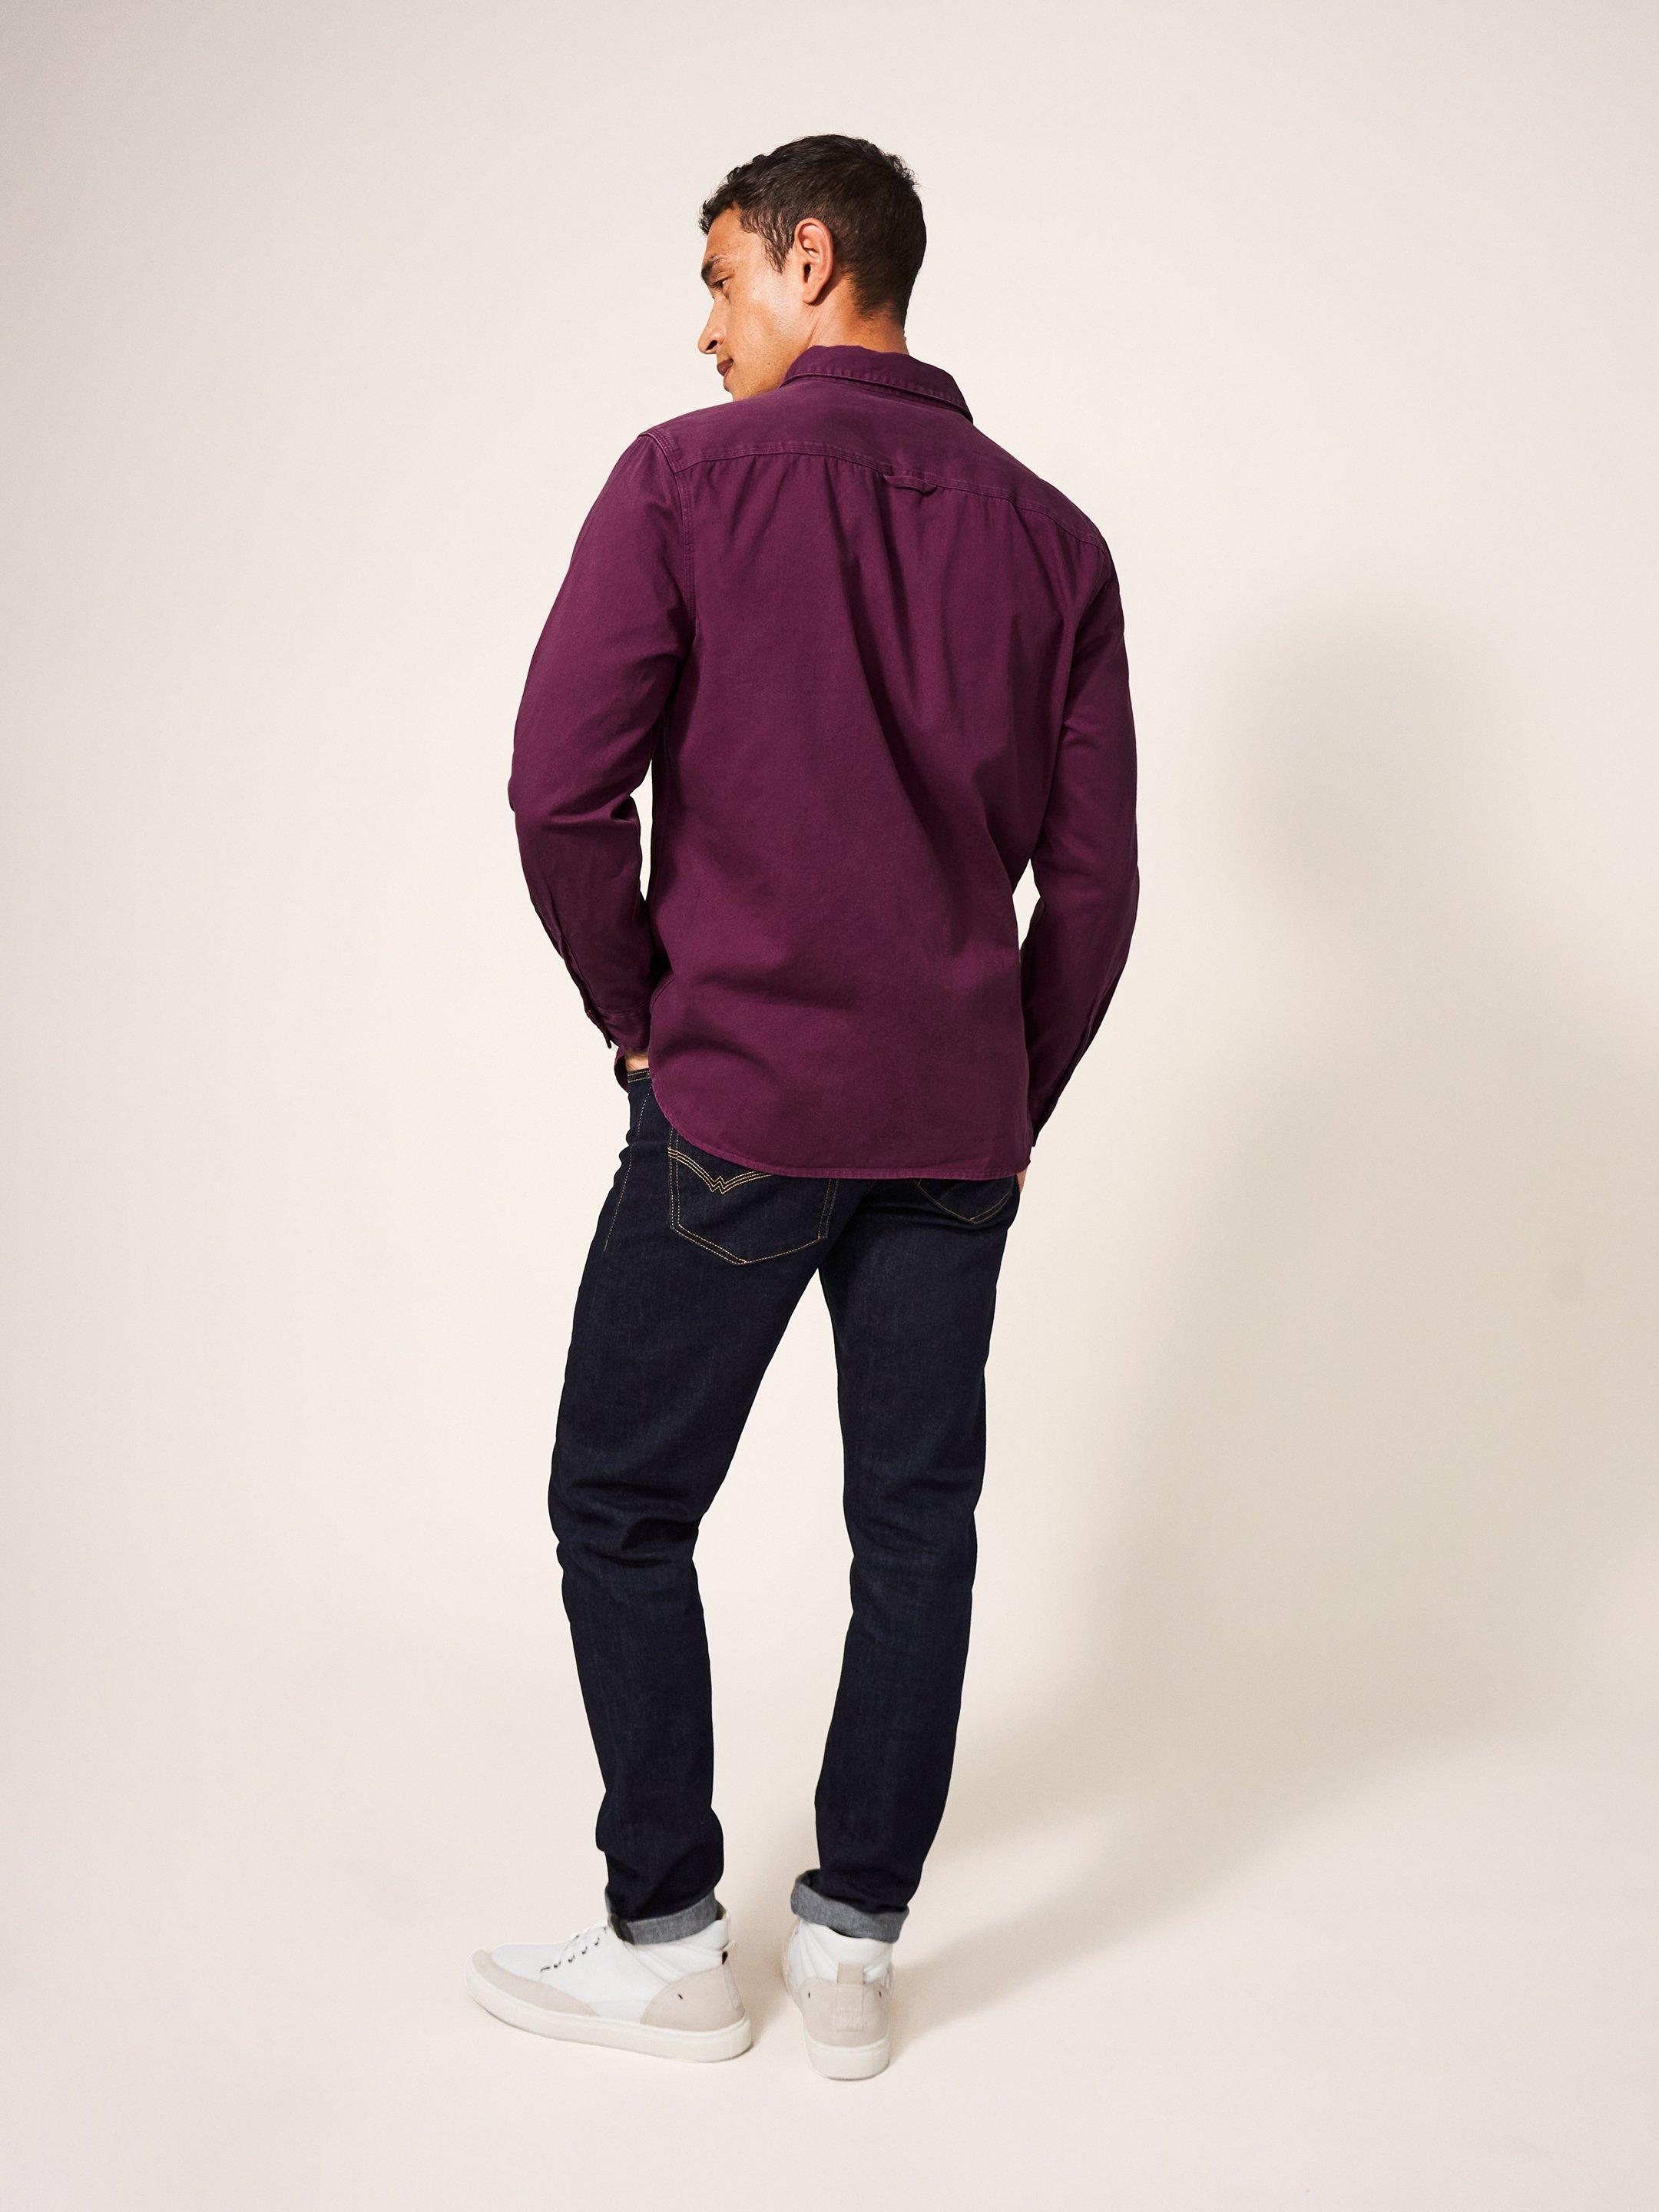 Furze Garment Dye Twill Shirt in MID PLUM - MODEL DETAIL